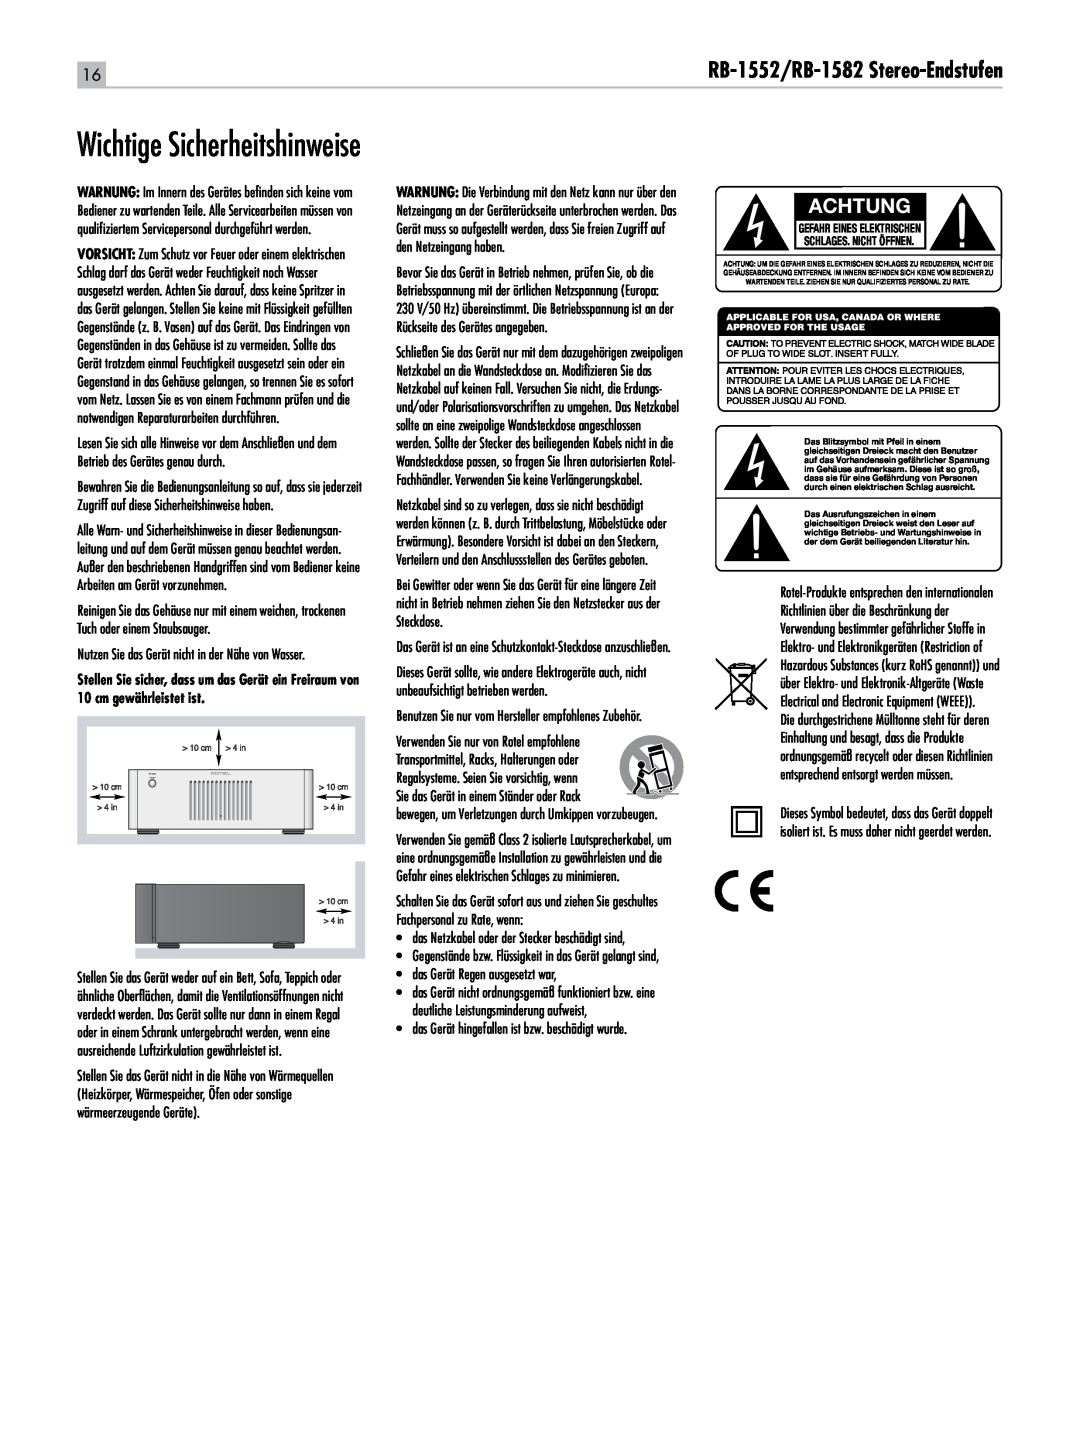 Rotel owner manual Wichtige Sicherheitshinweise, Achtung, RB-1552/RB-1582 Stereo-Endstufen 